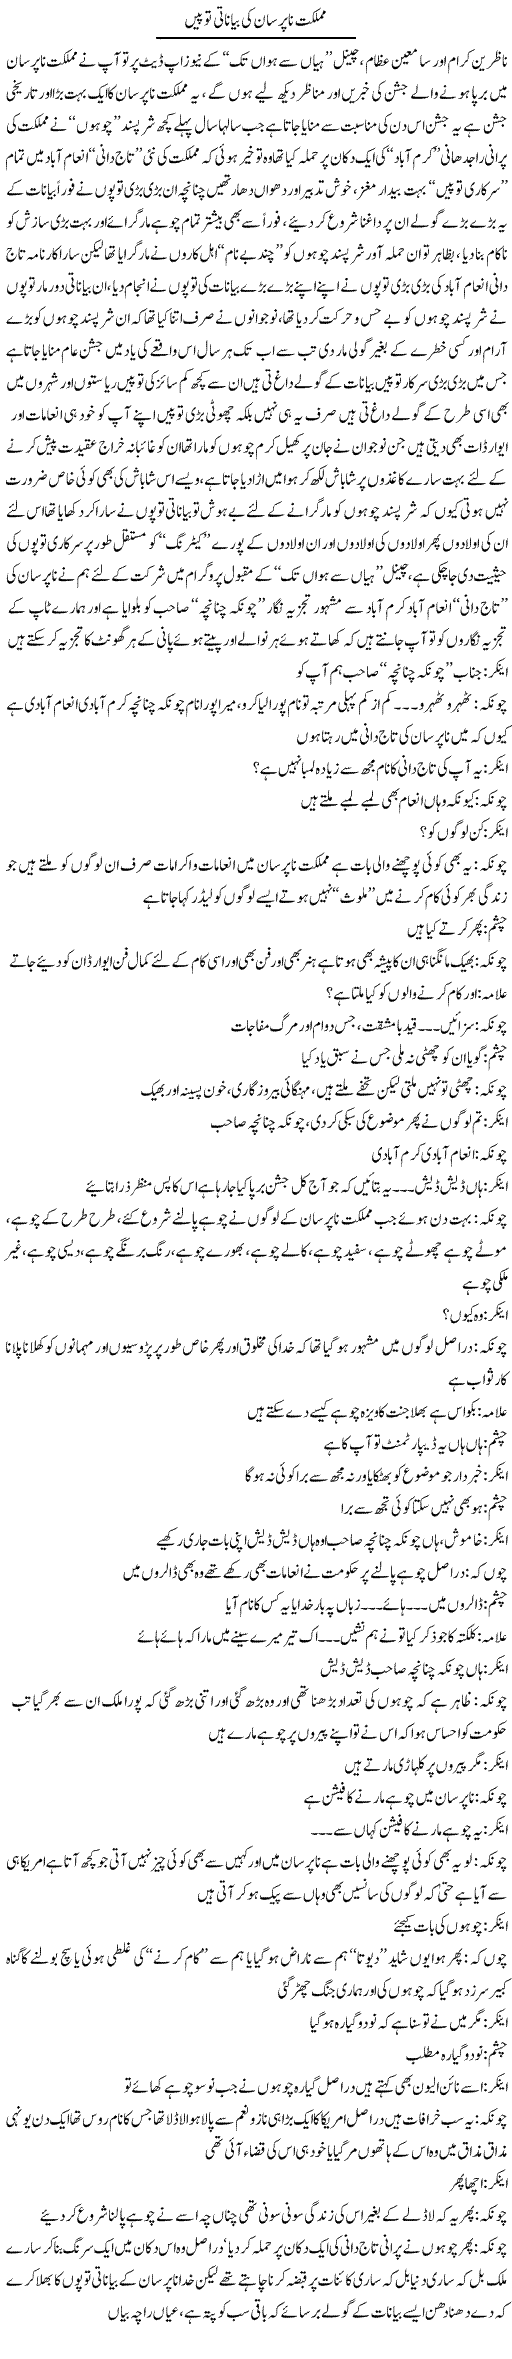 Mumlikat e Napursan Ki Bayanati Topain | Saad Ullah Jan Barq | Daily Urdu Columns